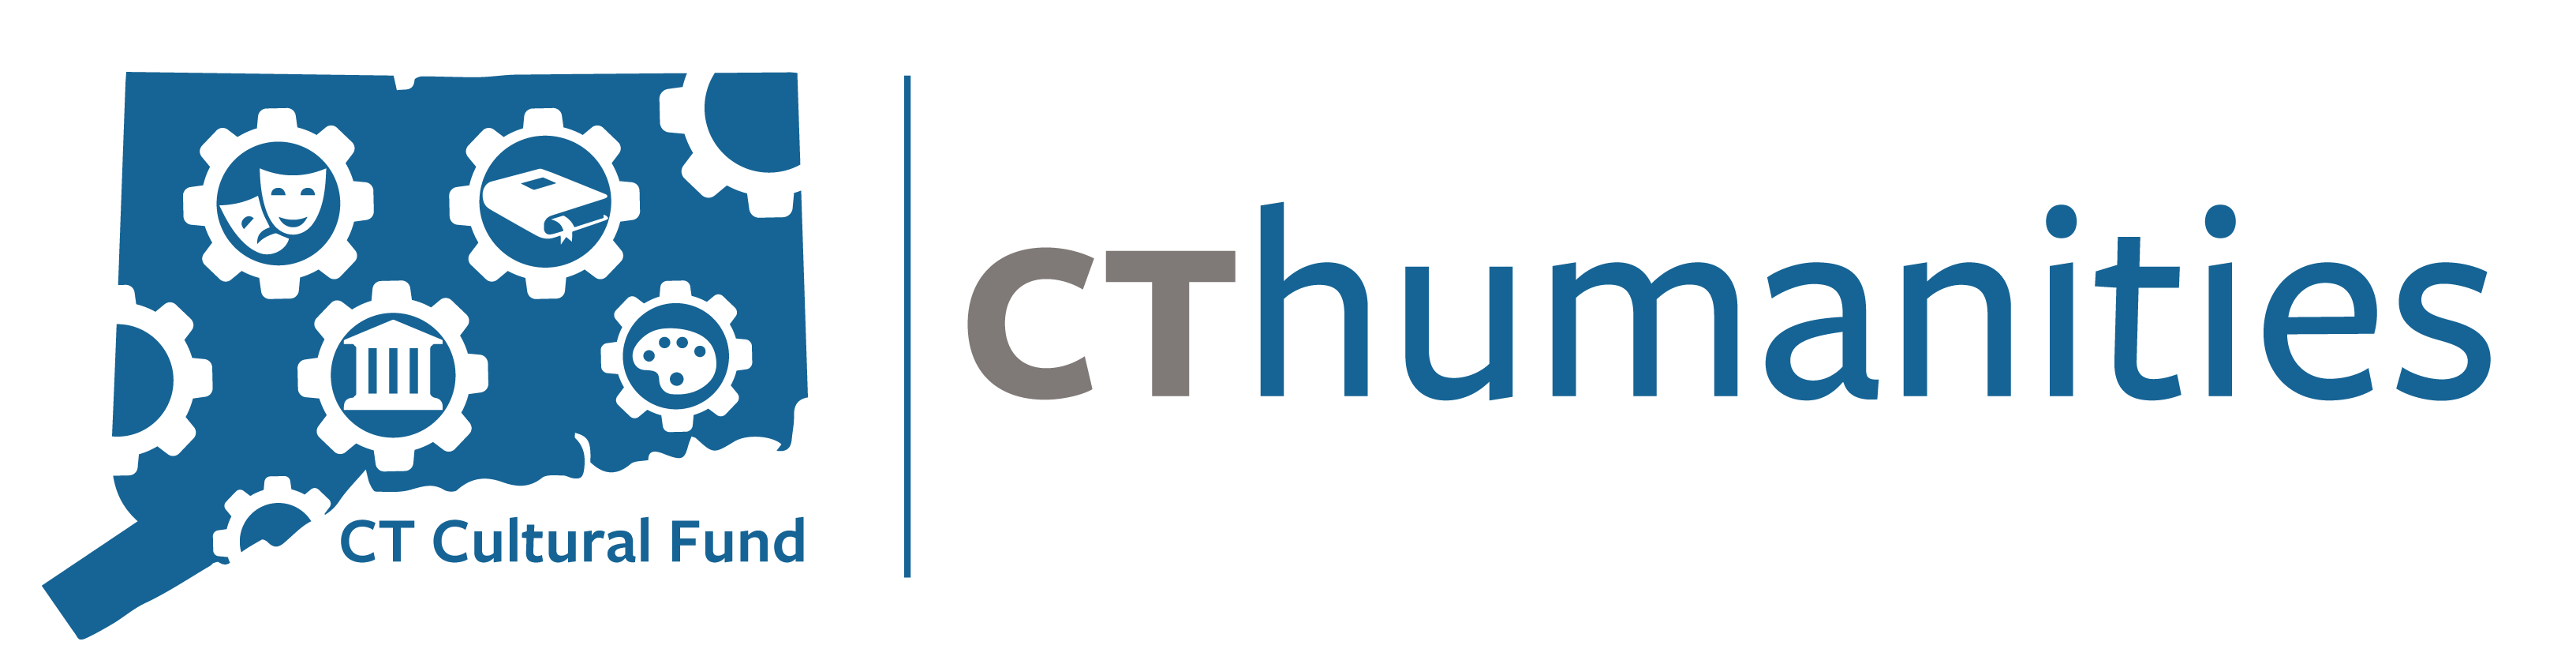 CT Humanities logo